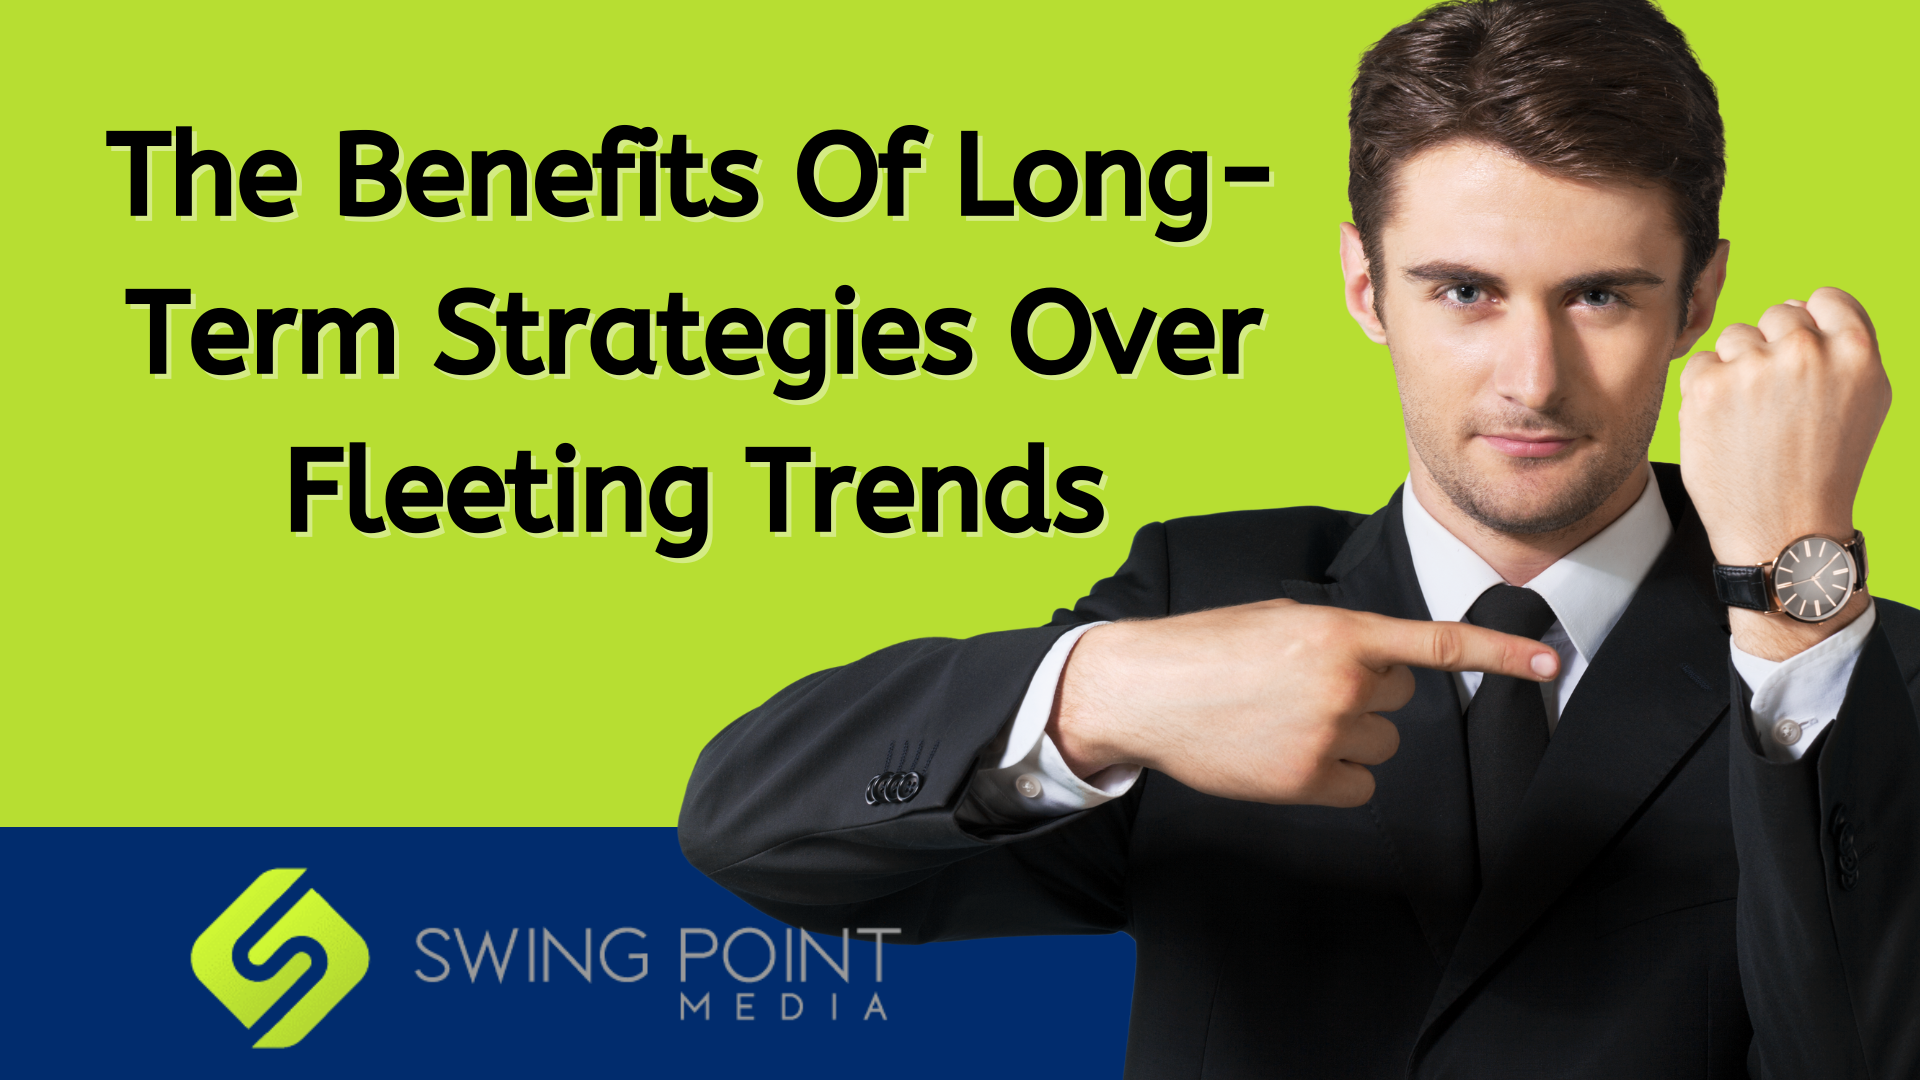 The Benefits Of Long-Term Strategies Over Fleeting Trends